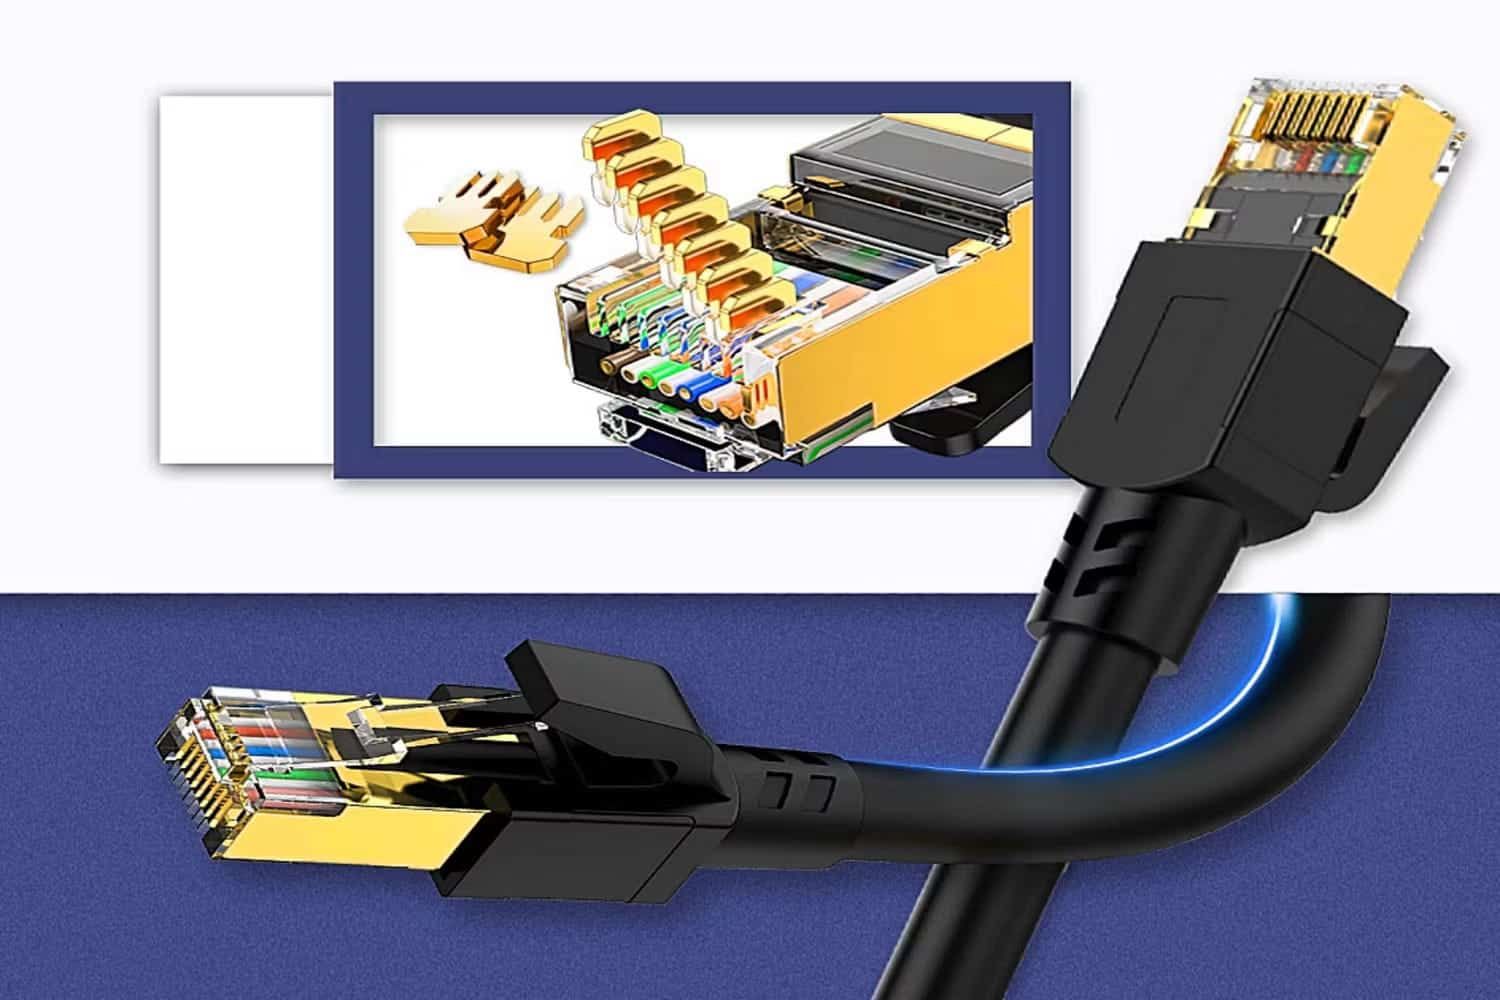 1SapWSiF1u OxYbKA8VaQTw DzTechs | دليل أحدث وأفضل كابلات Ethernet من النوع Cat 8 لتحسين أداء شبكتك